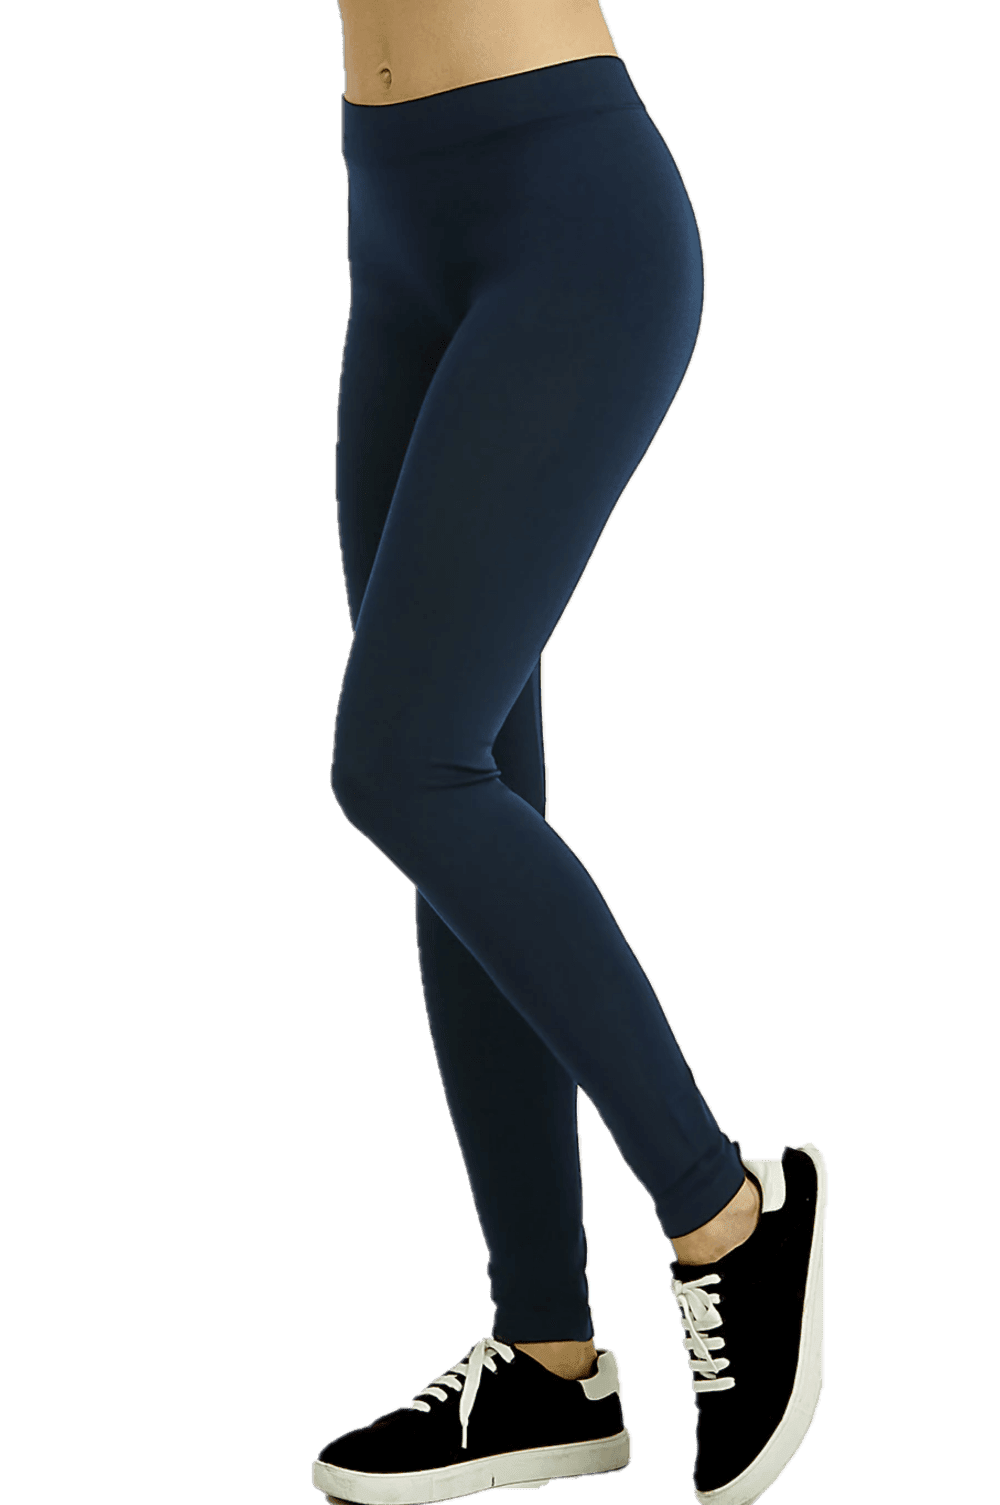 Women's Polyester Full Length Color Leggings, Plus Size, Burgundy, 1 Count,  1 Pack 